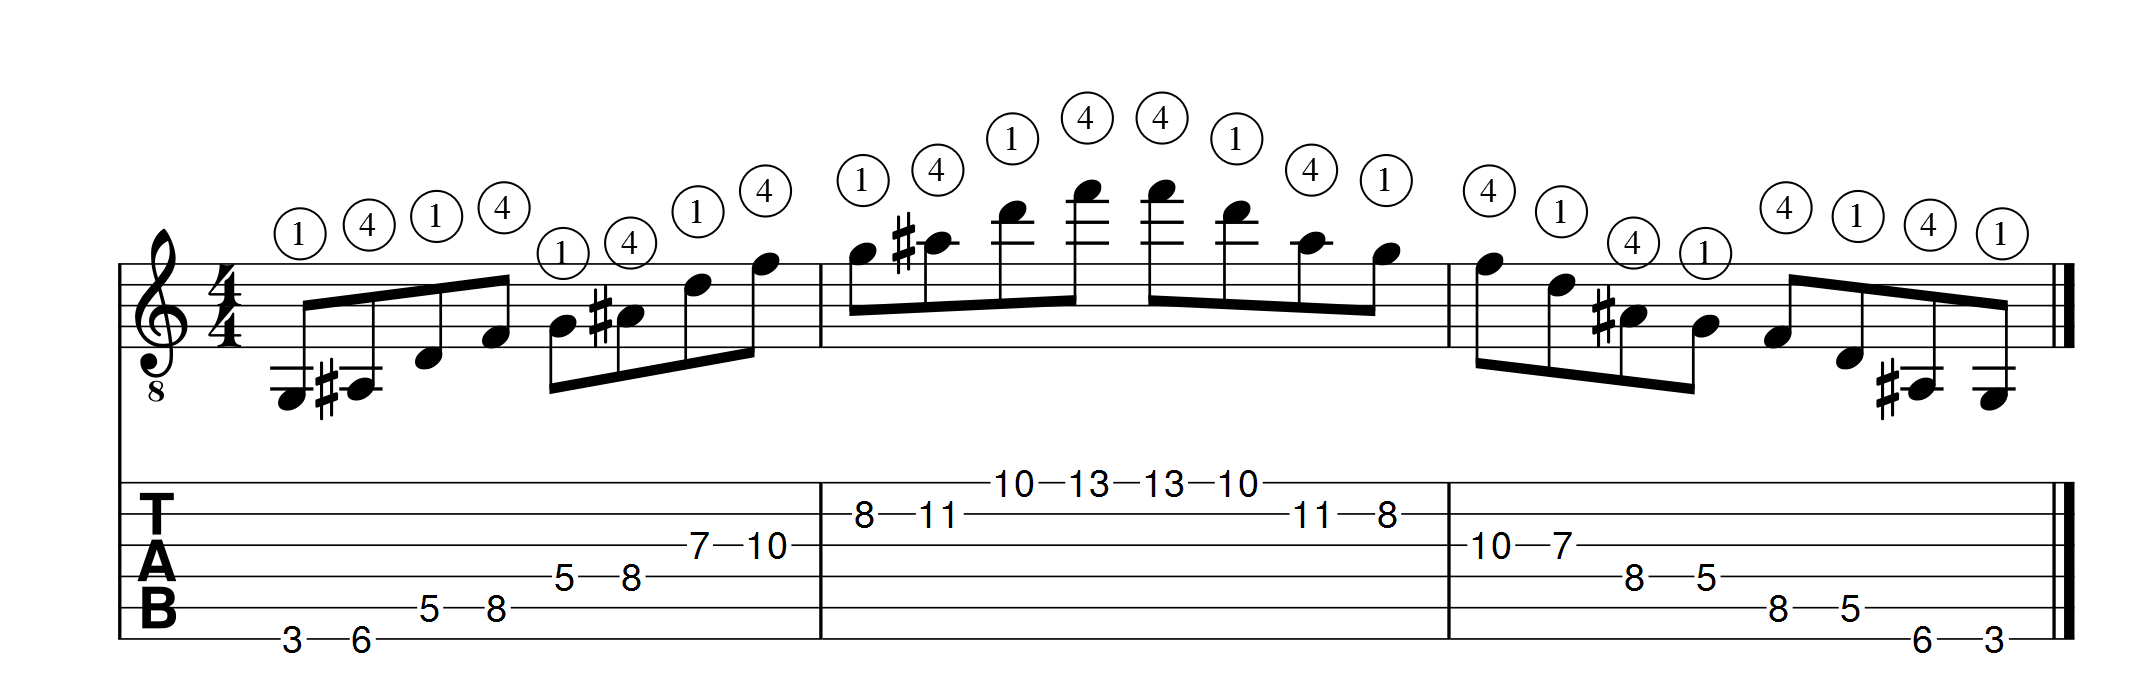 sol mineur 7 position 1 horizontale 1 apprendre la guitare